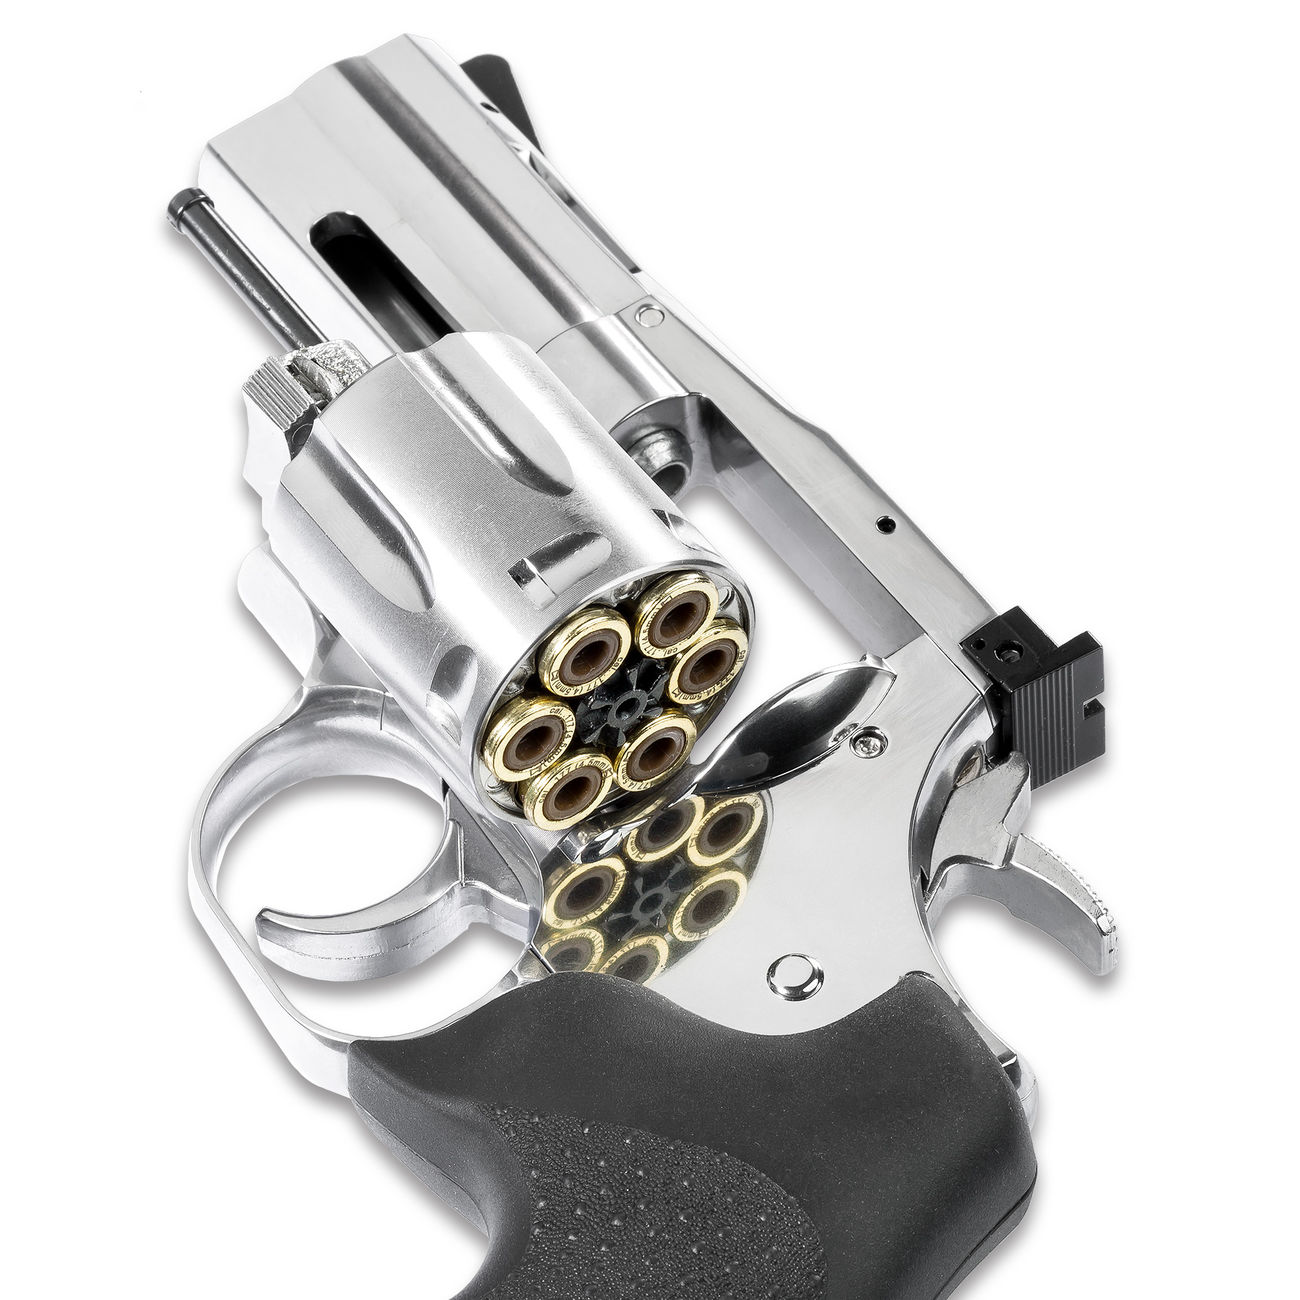 ASG Dan Wesson 715 2,5 Zoll CO2 Revolver Kal. 4,5 mm BB silber Bild 3